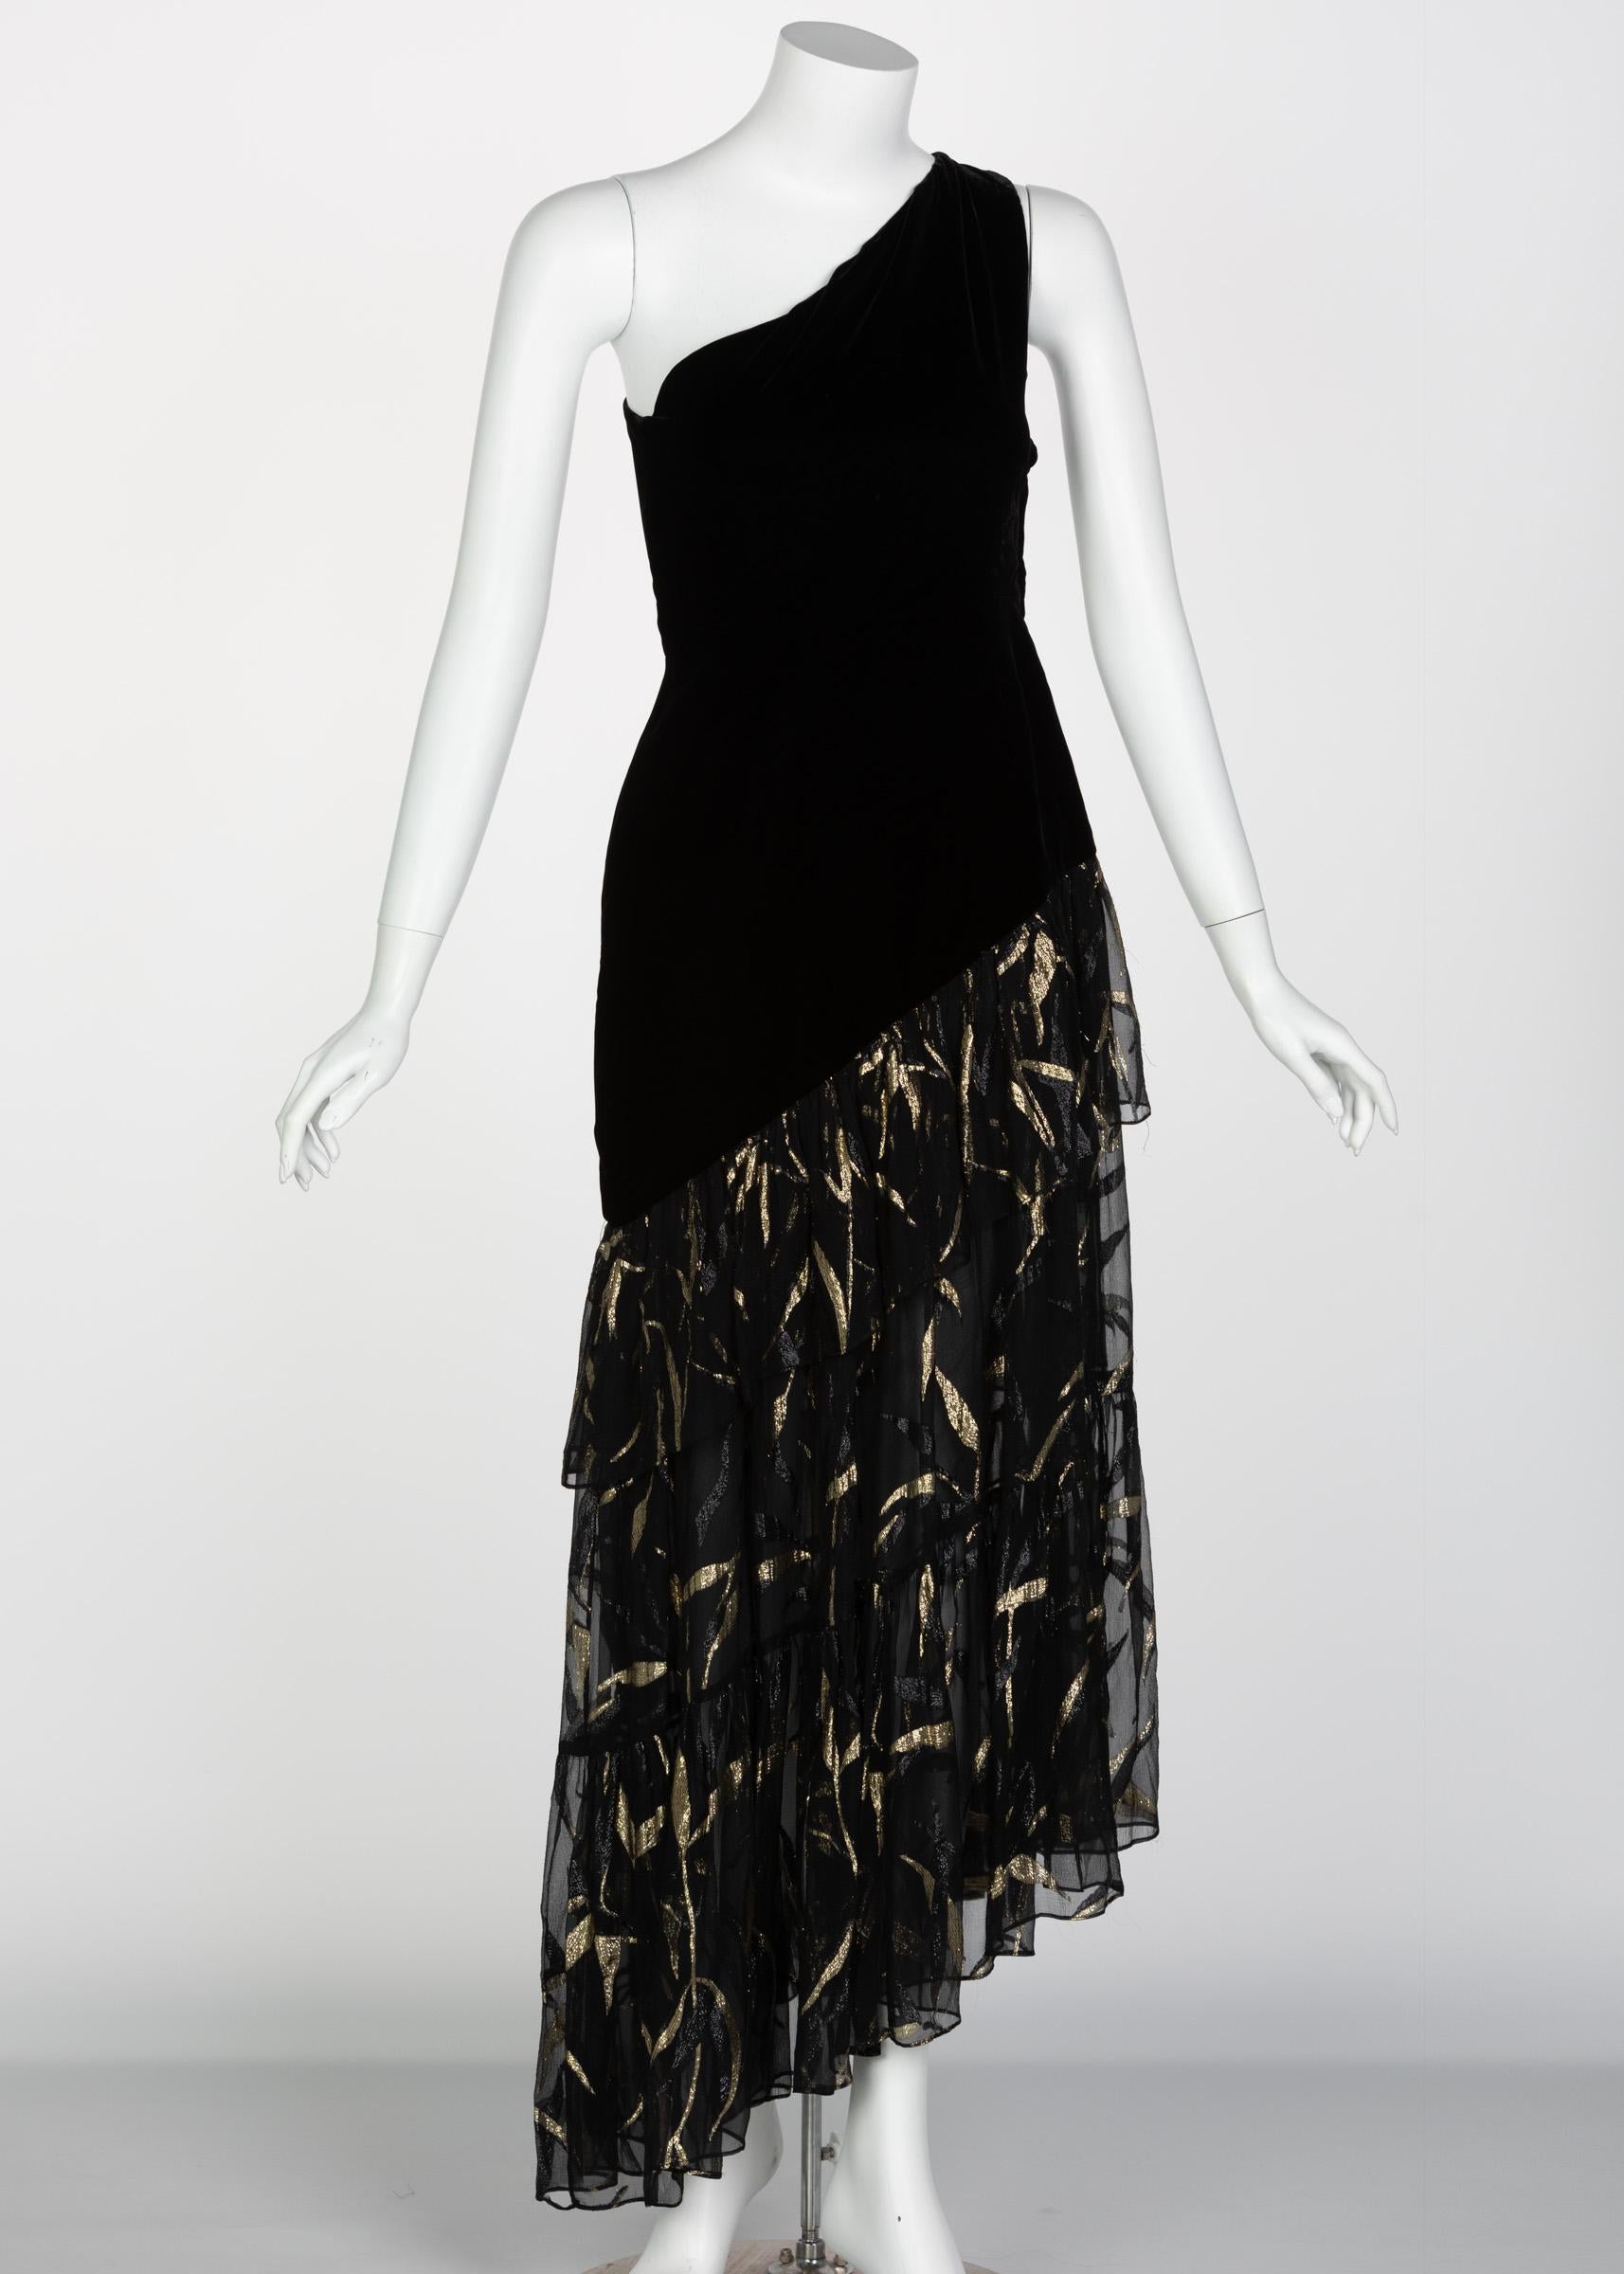 Saint Laurent YSL One shoulder Black Velvet Metallic Layered Dress, 1980s In Excellent Condition For Sale In Boca Raton, FL